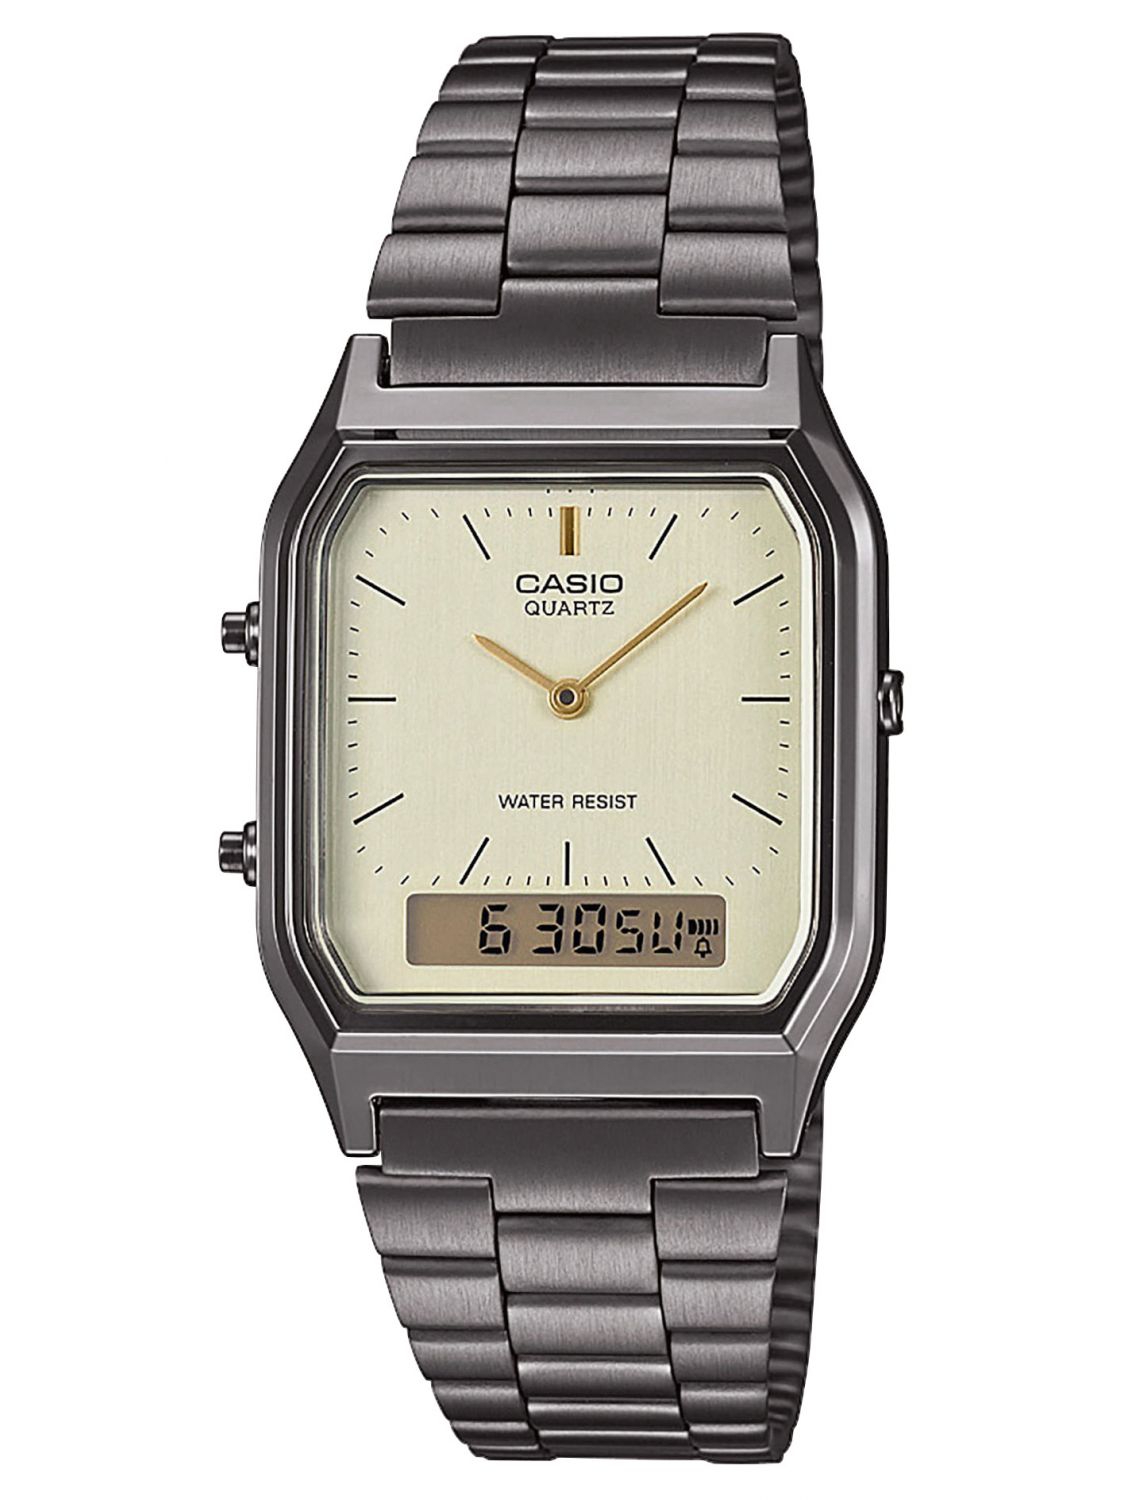 Casio Aq 230egg 9aef Ana Digi Wristwatch Uhrcenter